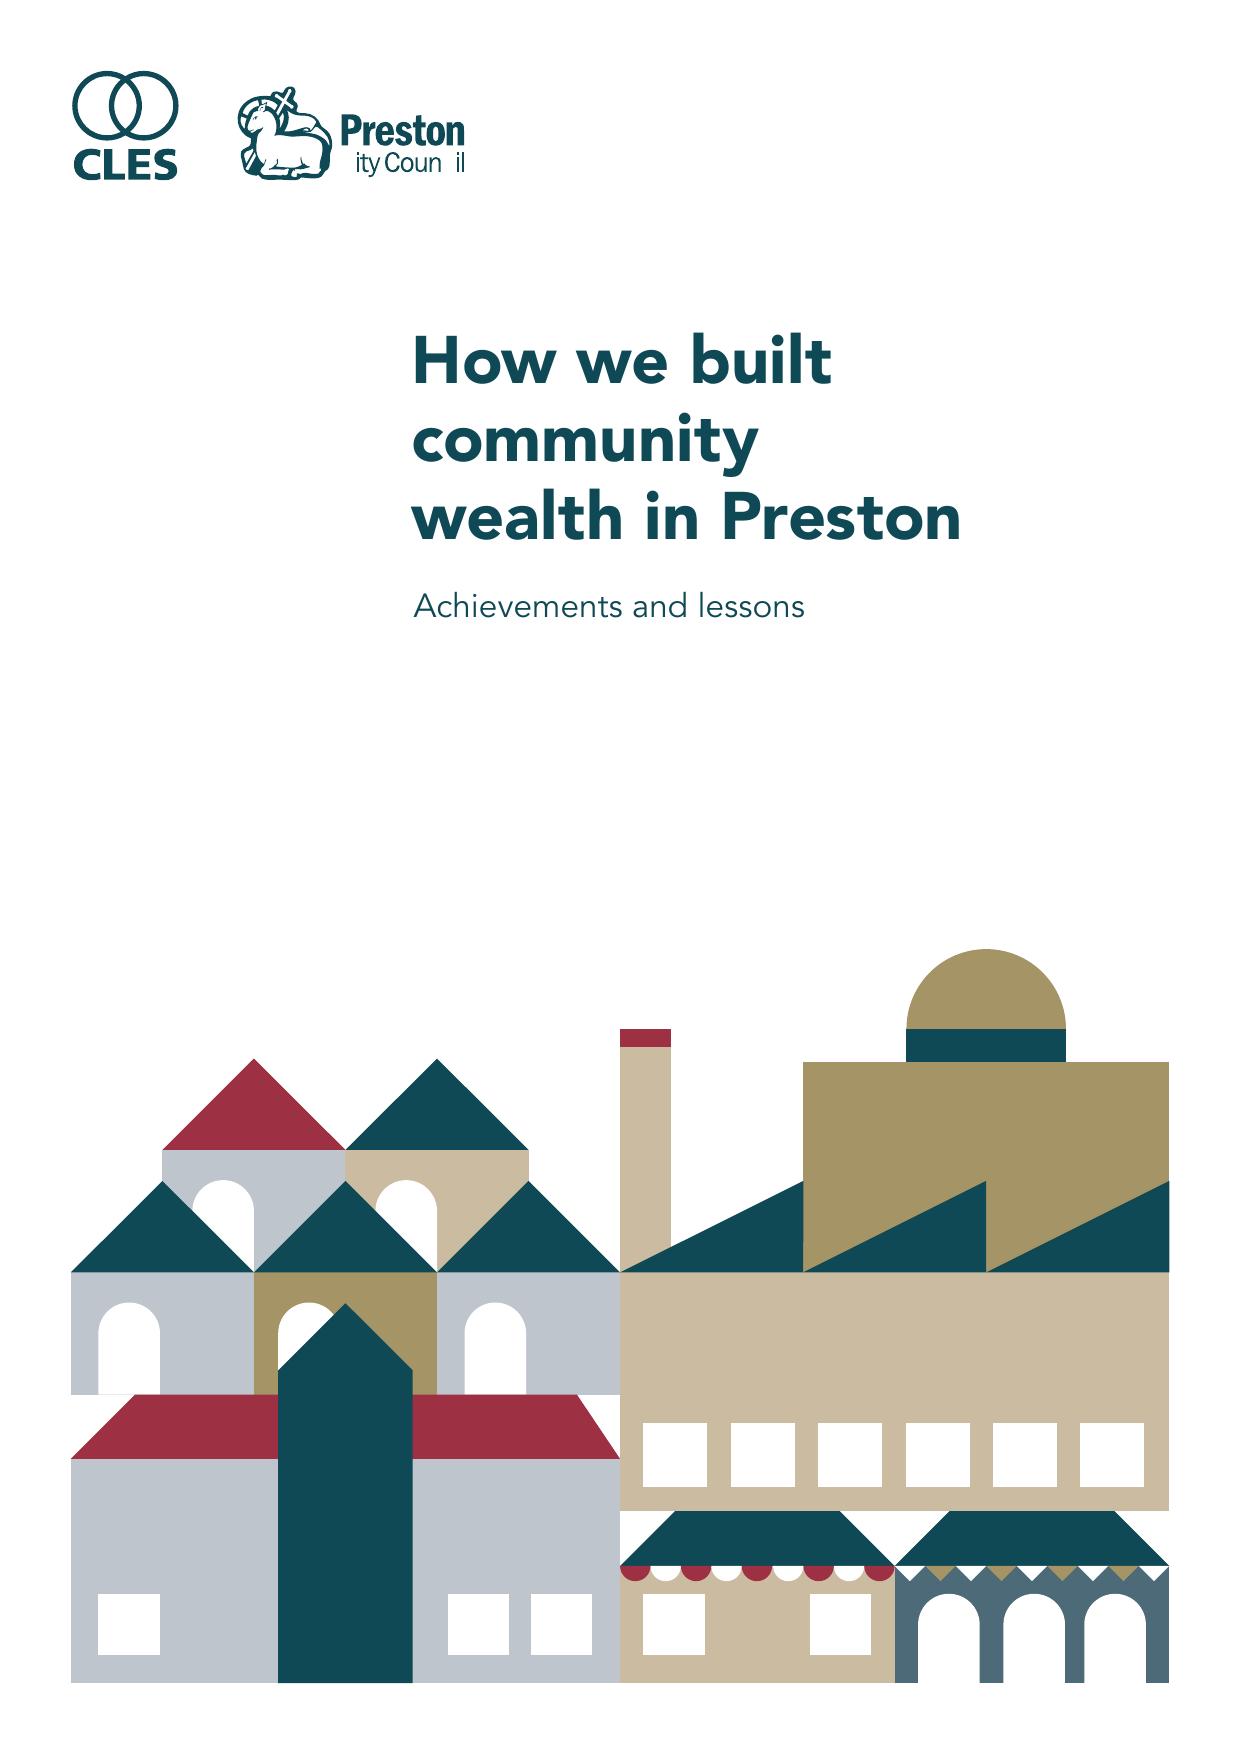 How we built community wealth in Preston